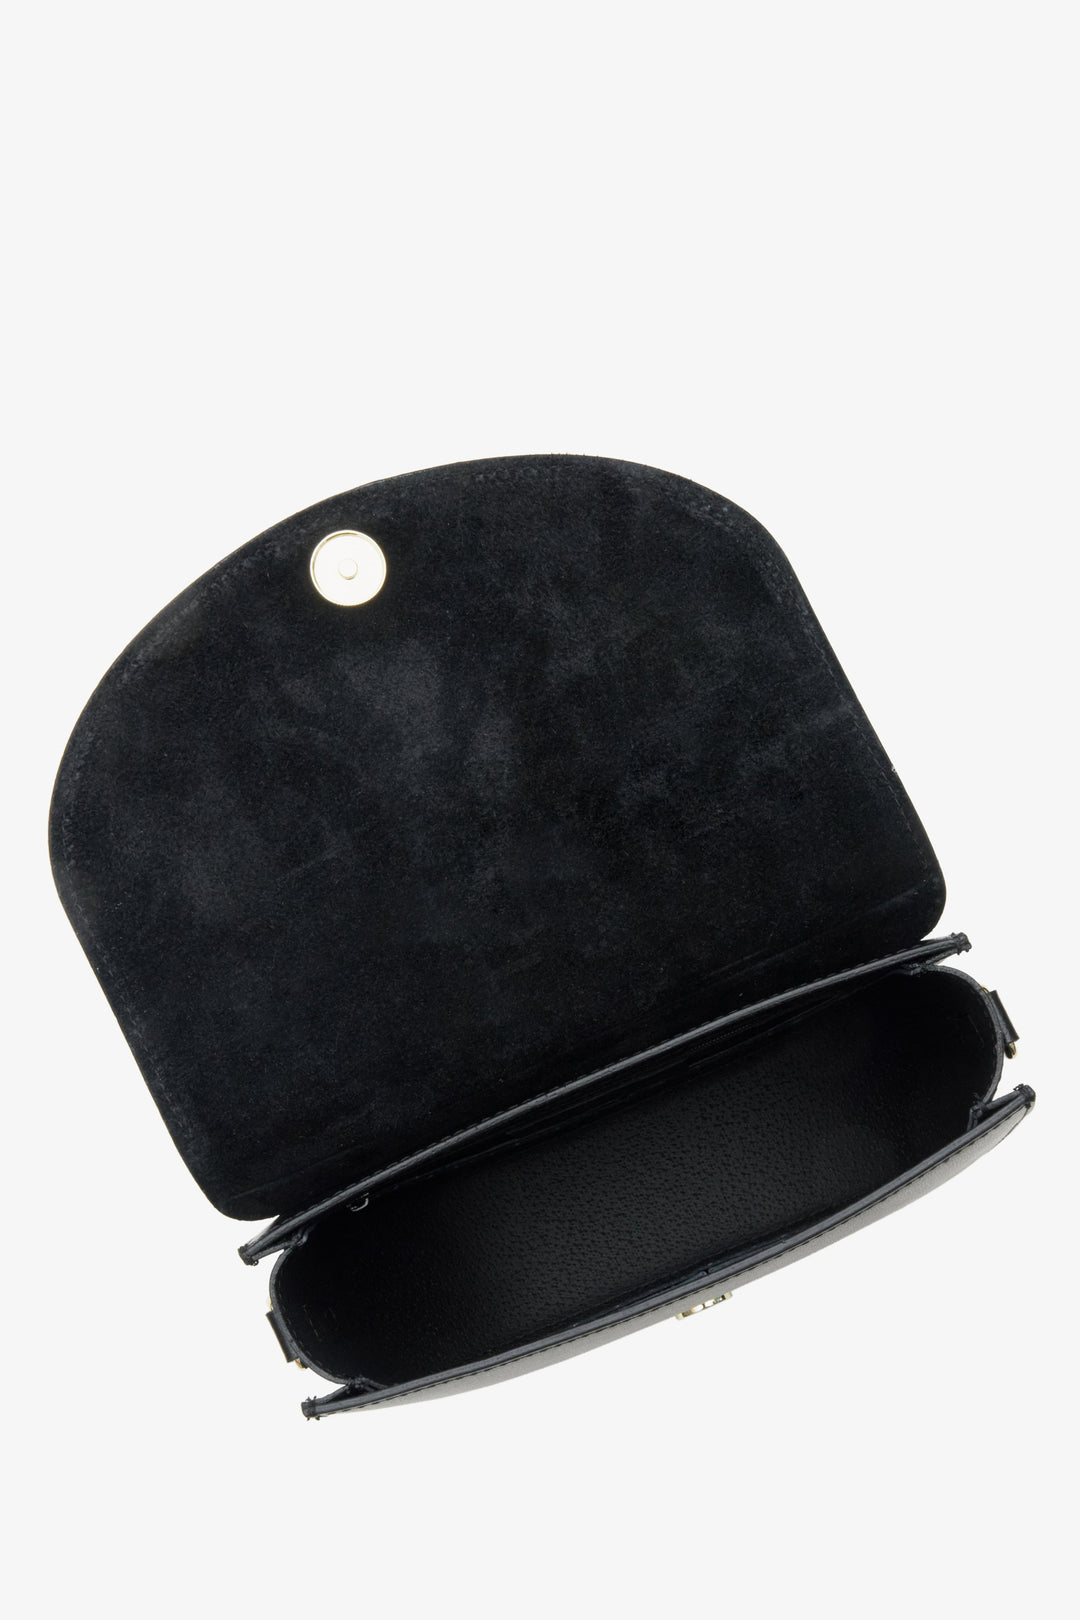 Czarna damska torebka Estro ze skóry naturalnej - zbliżenie na wnętrze modelu.